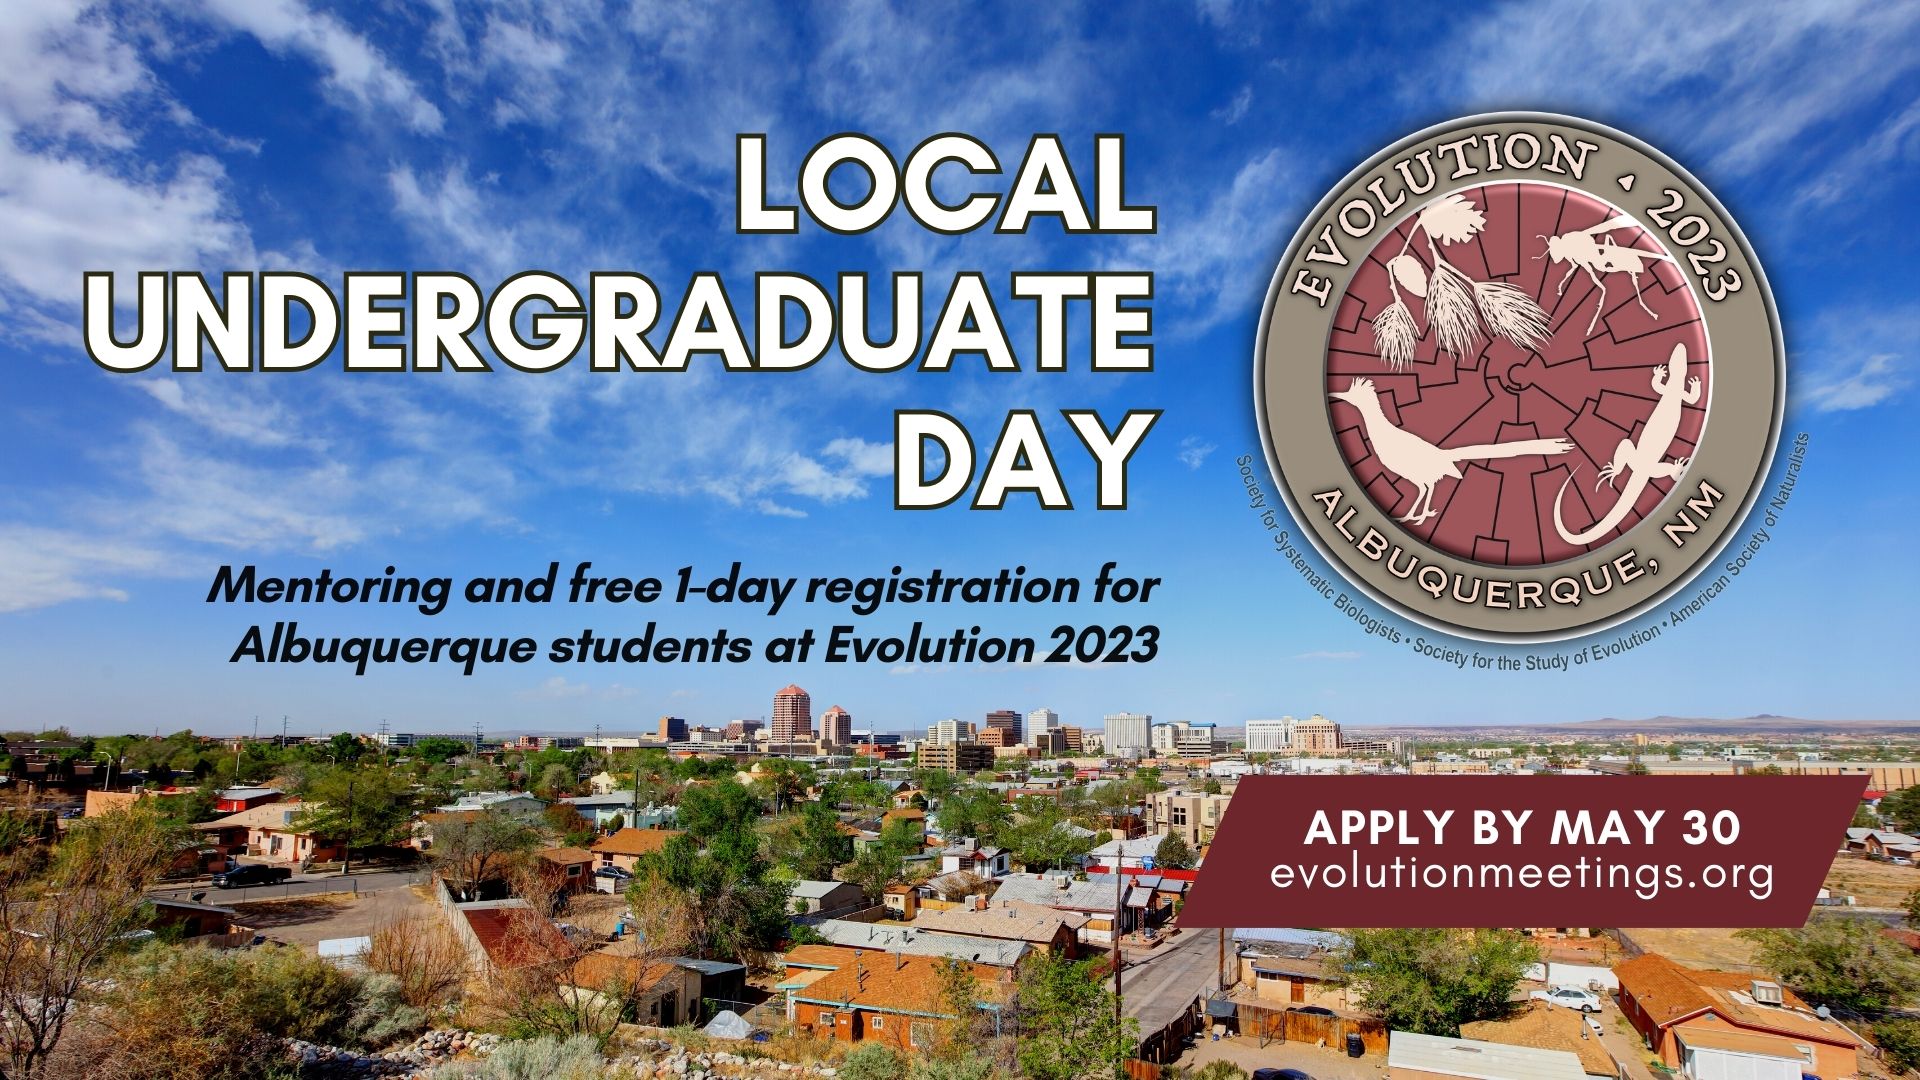 Local Undergraduate Day at Evolution 2023